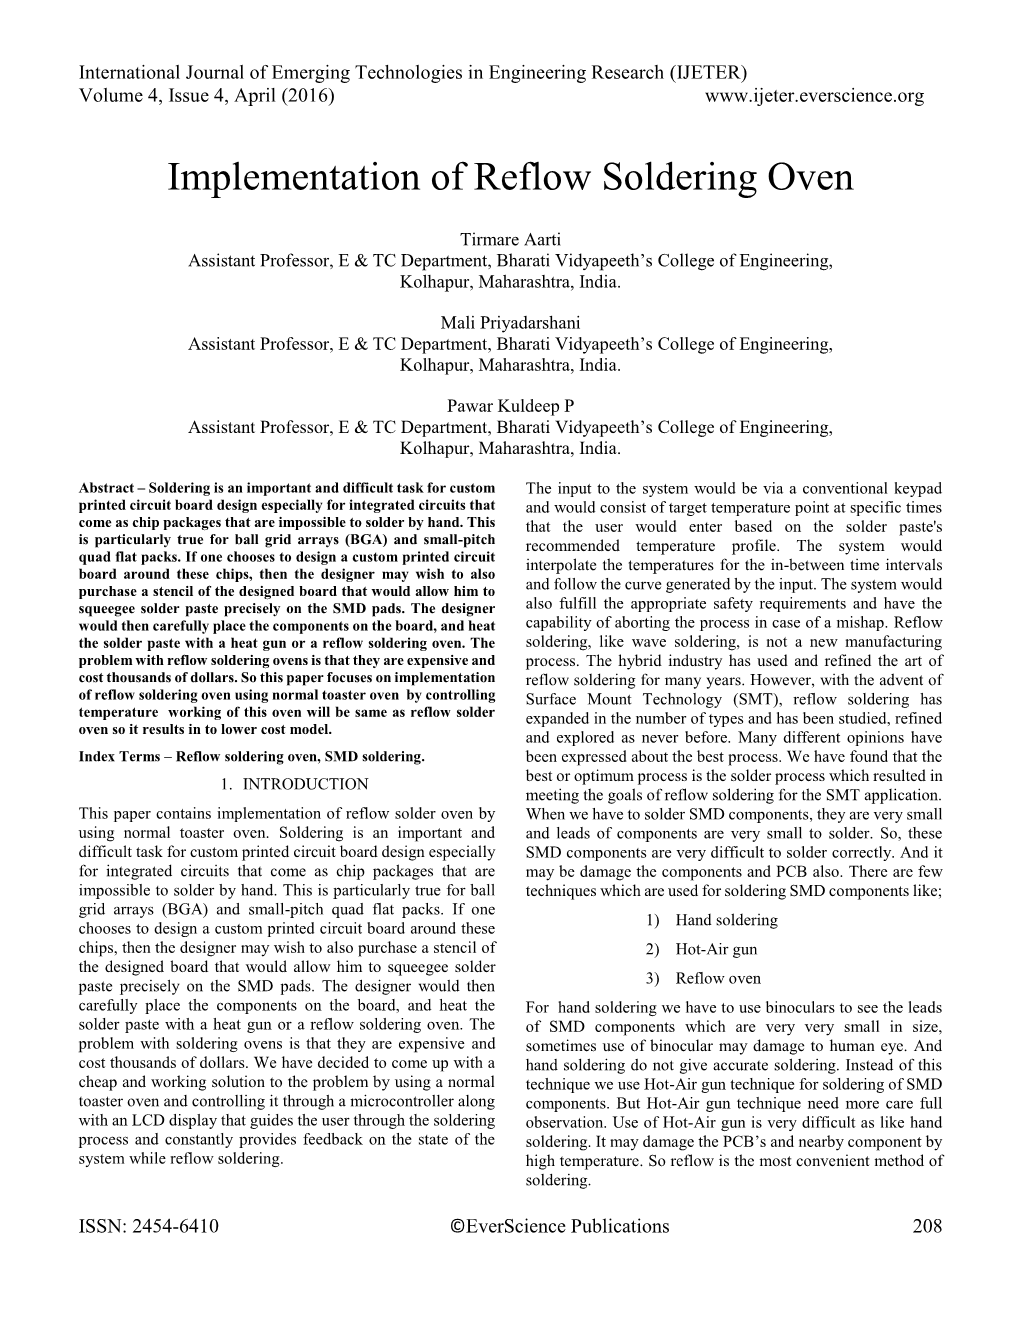 Implementation of Reflow Soldering Oven